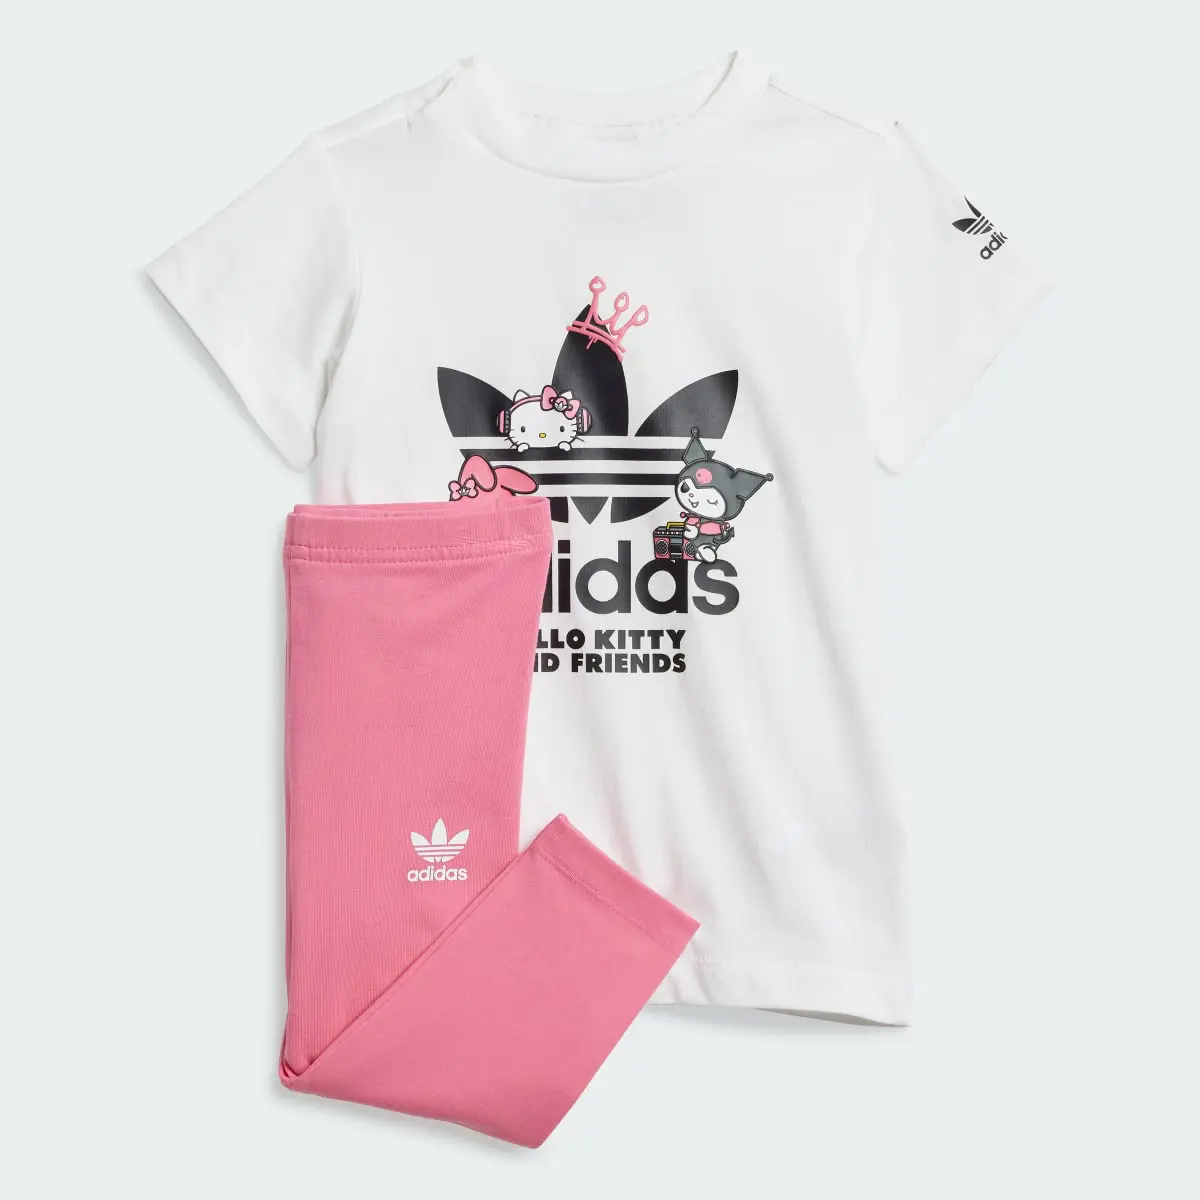 Adidas Originals x Hello Kitty Elbise Tayt Takımı. 1